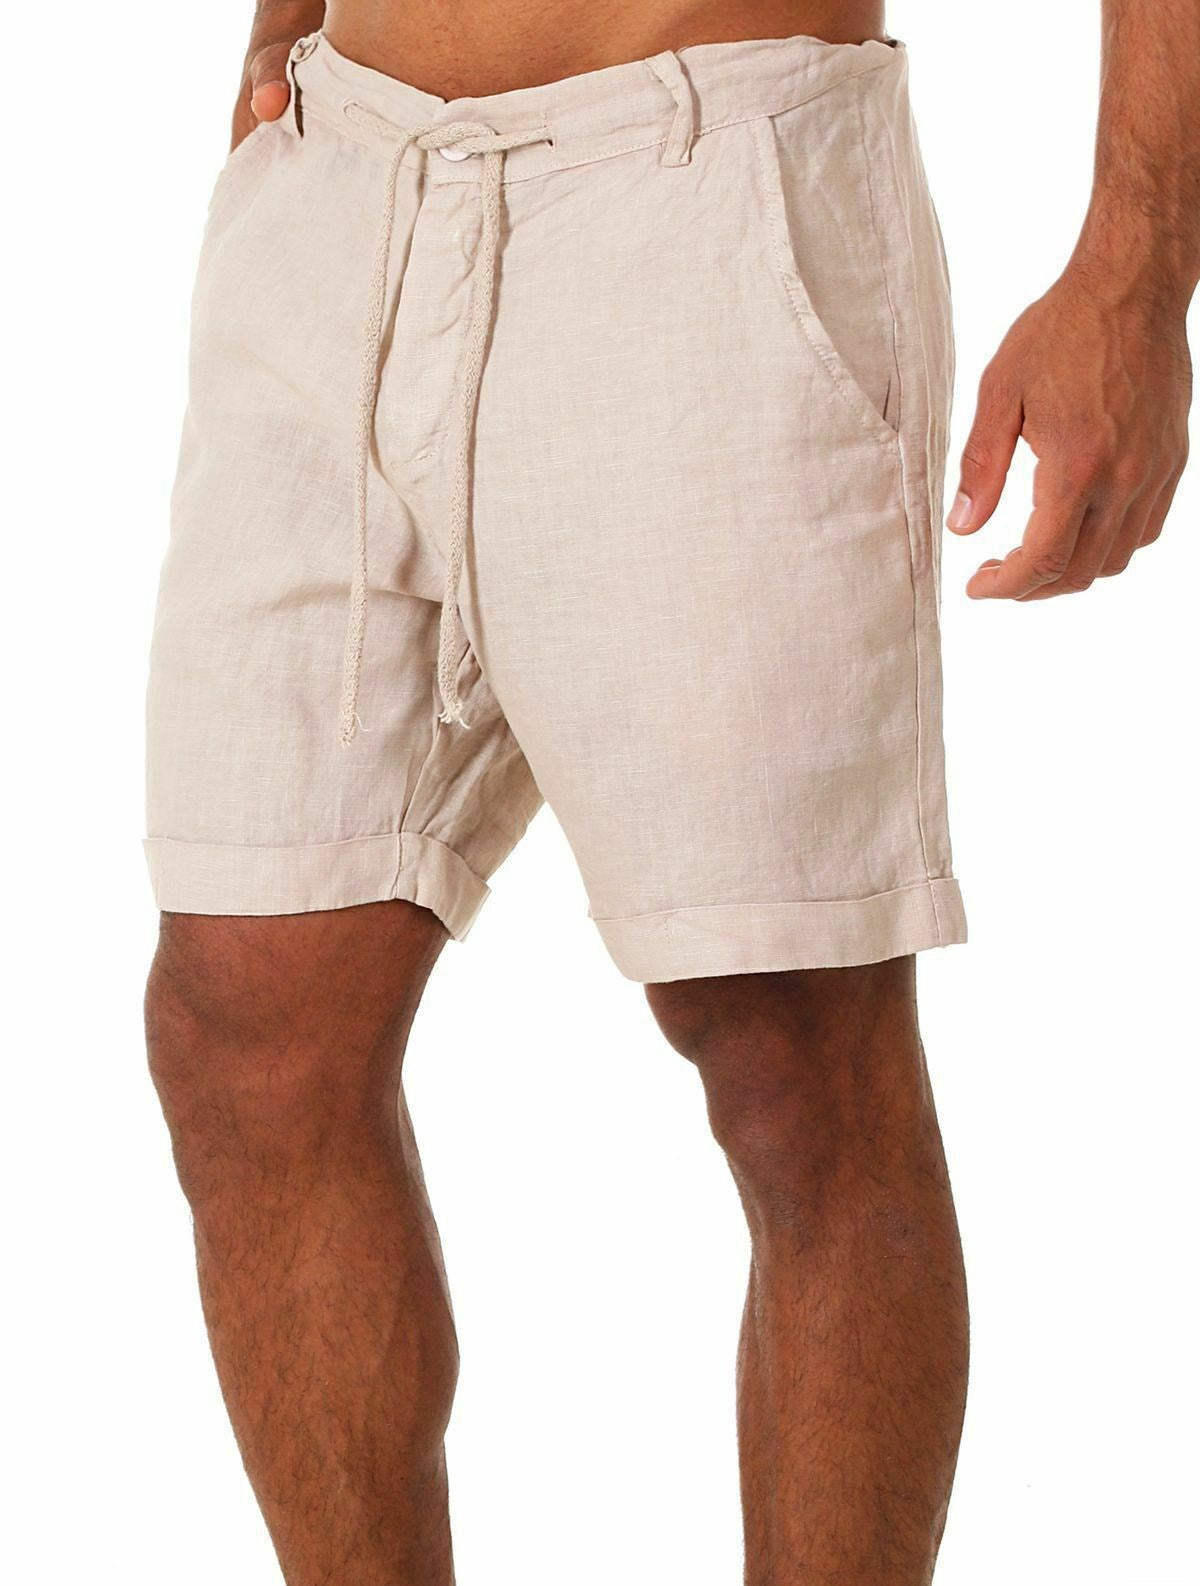 Simple Design Linen Summer Men's Shorts-Shorts-Free Shipping at meselling99